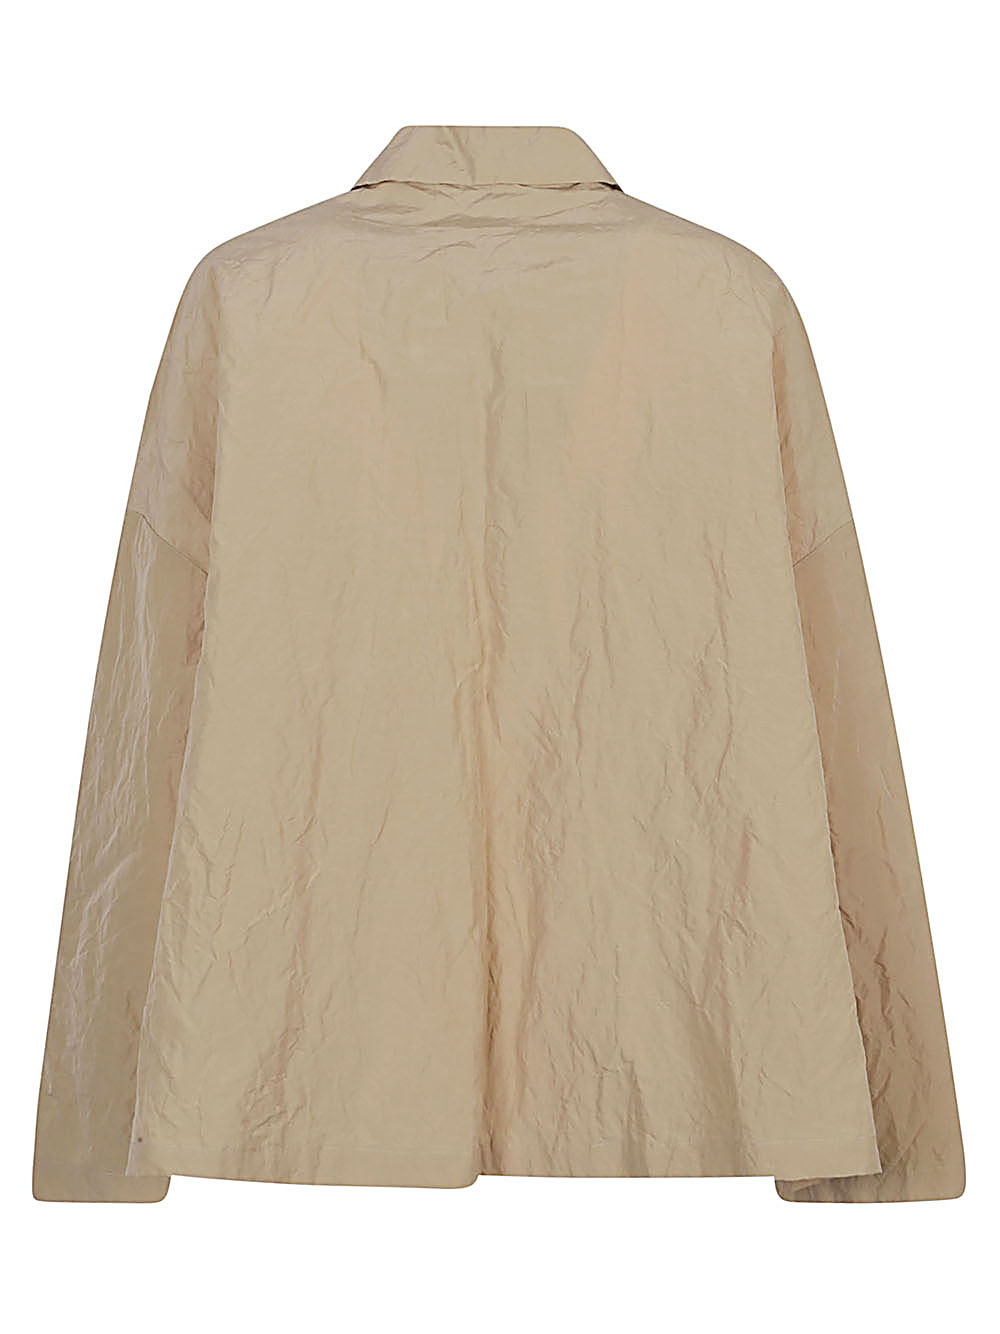 Apuntob APUNTOB- Cotton And Linen Blend Caban Jacket